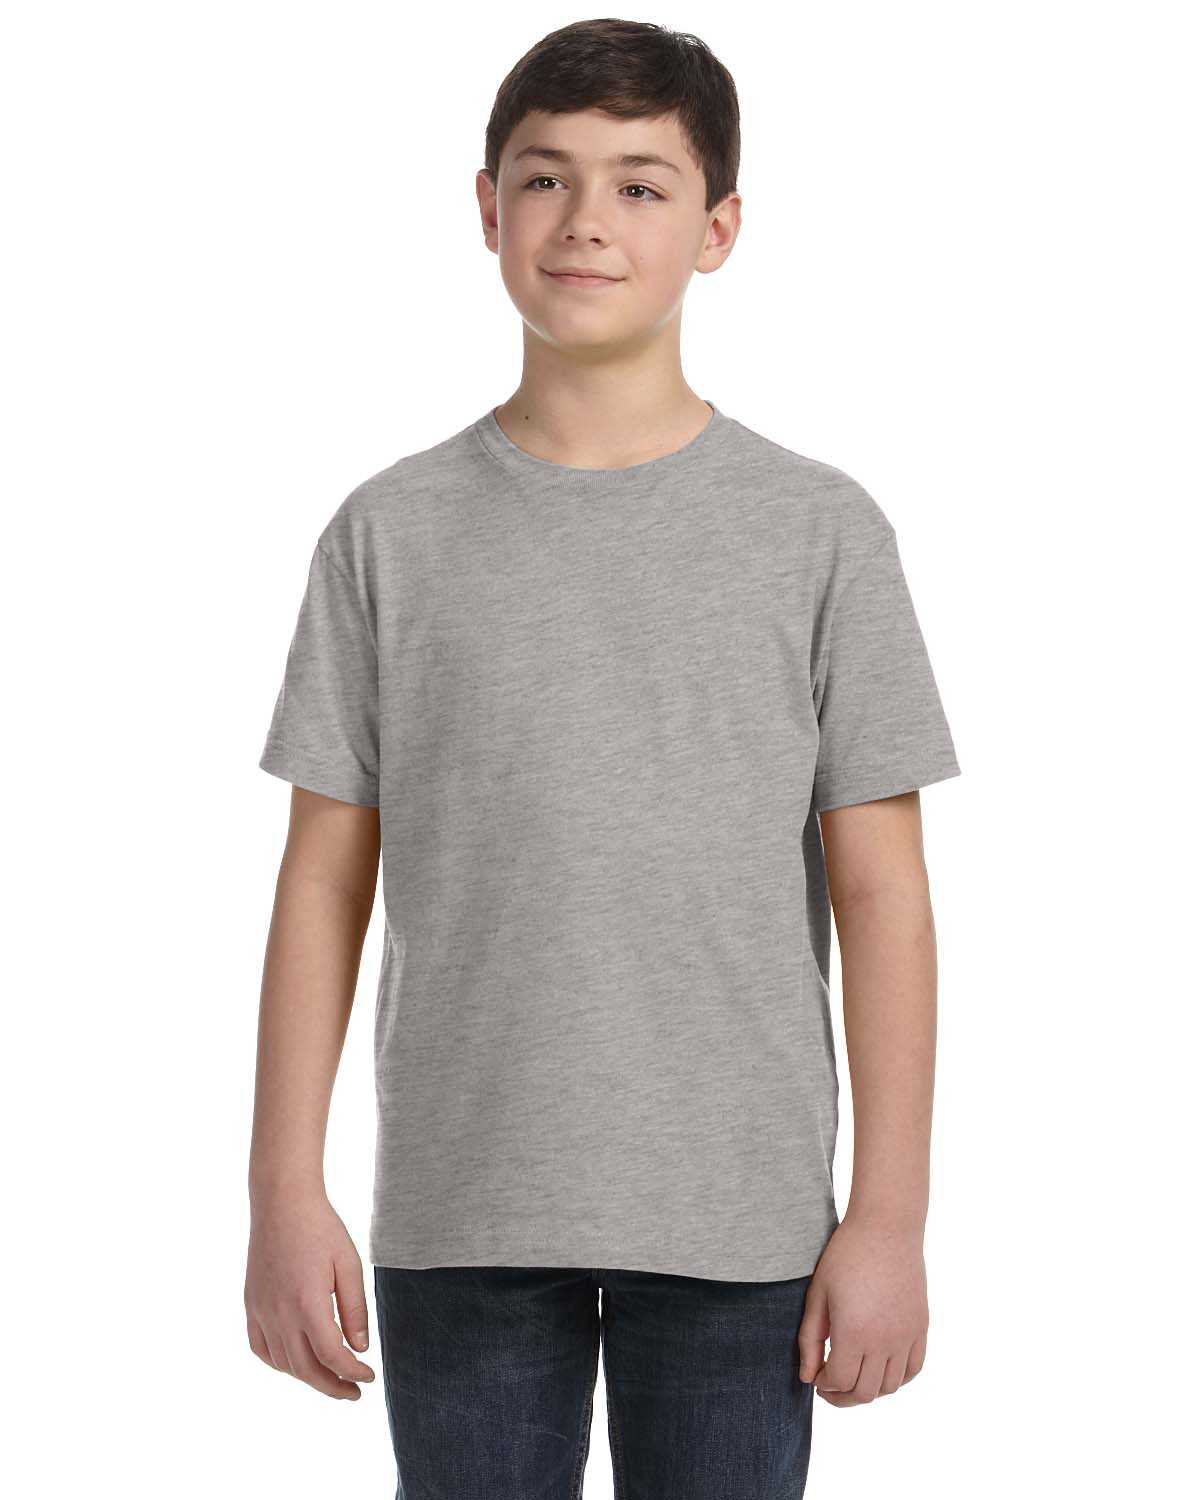 LAT 6101 Youth Fine Jersey T-Shirt | ApparelChoice.com